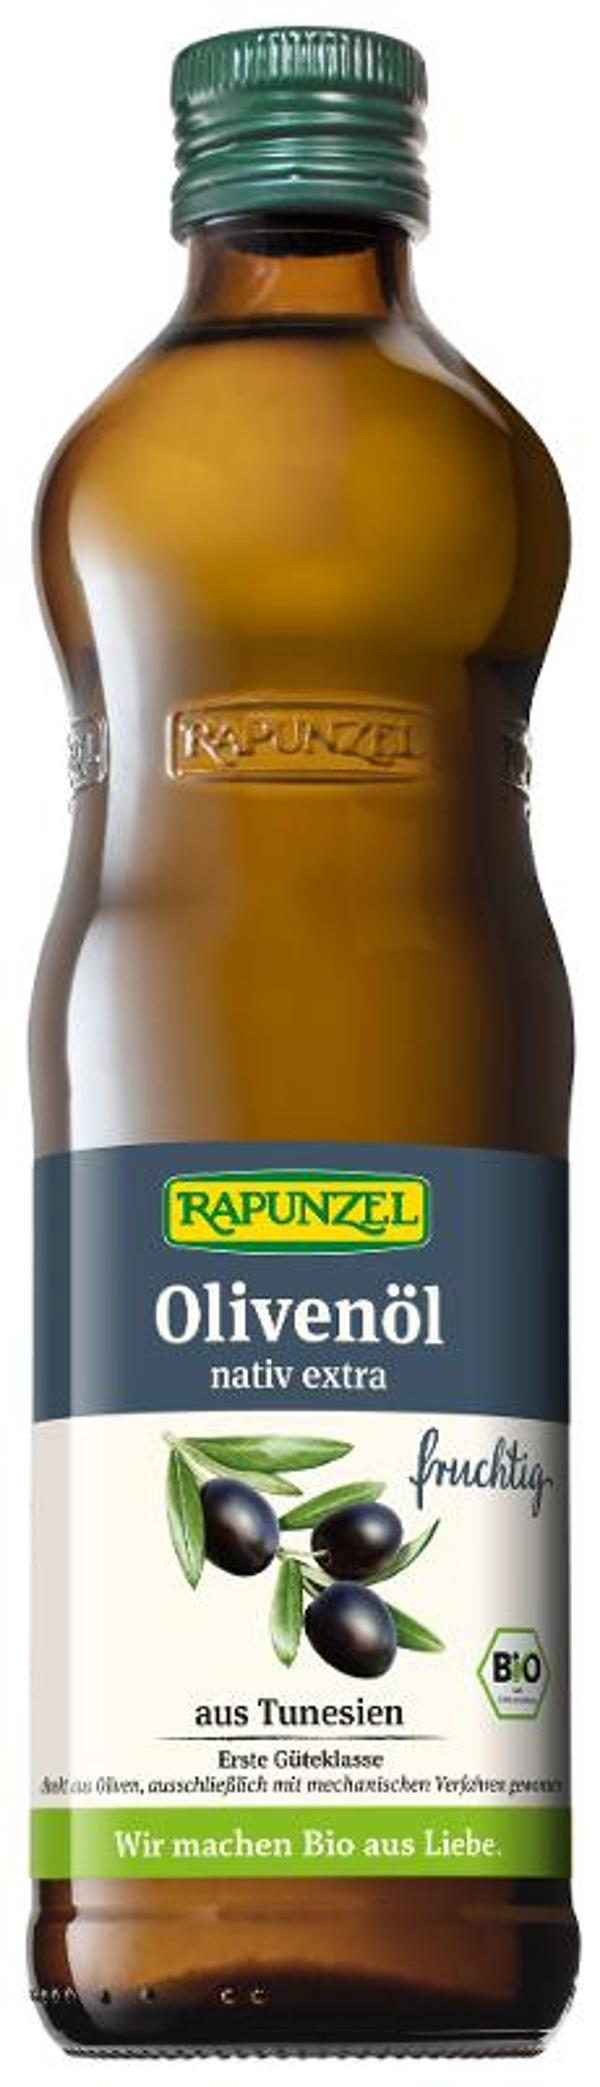 Produktfoto zu Olivenöl fruchtig, nativ extra, 0,5Ltr